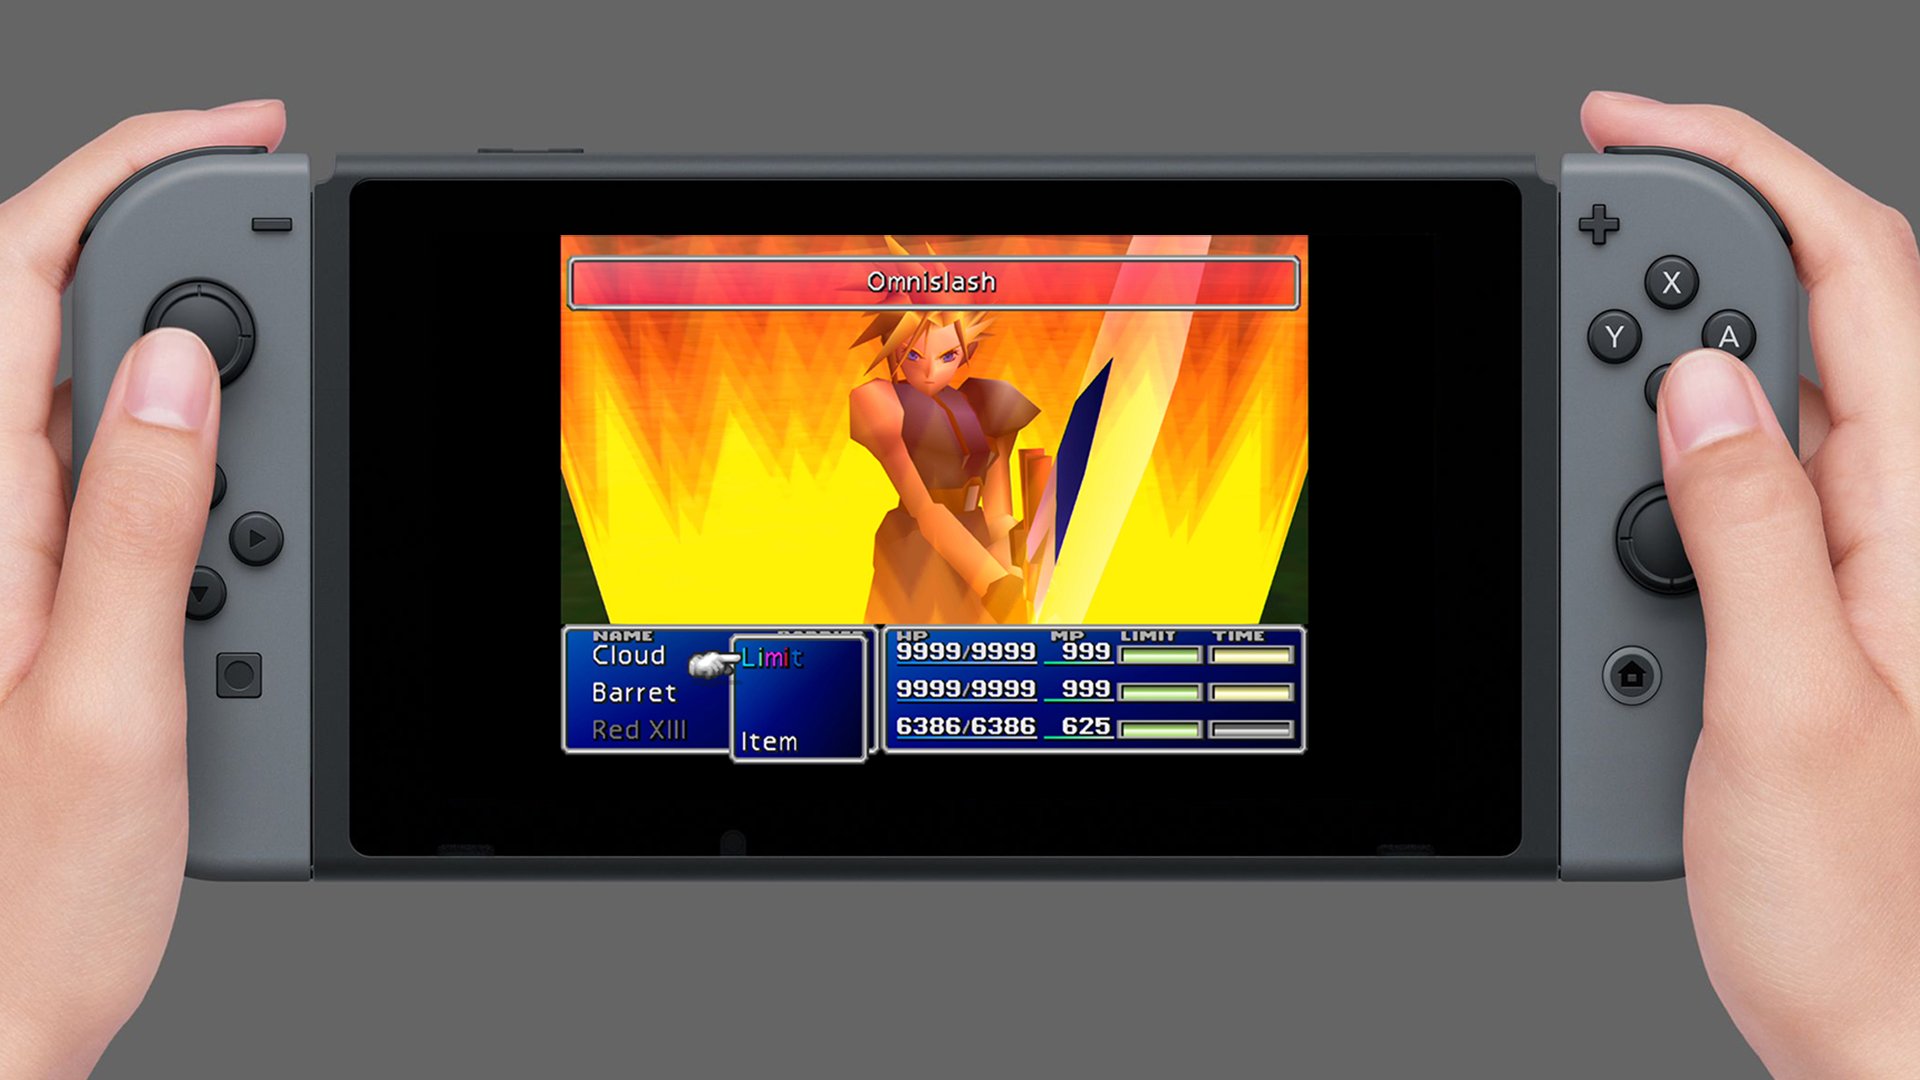 Legend of Zelda Breath of the Wild Wii U ( Region : Japan) game soft